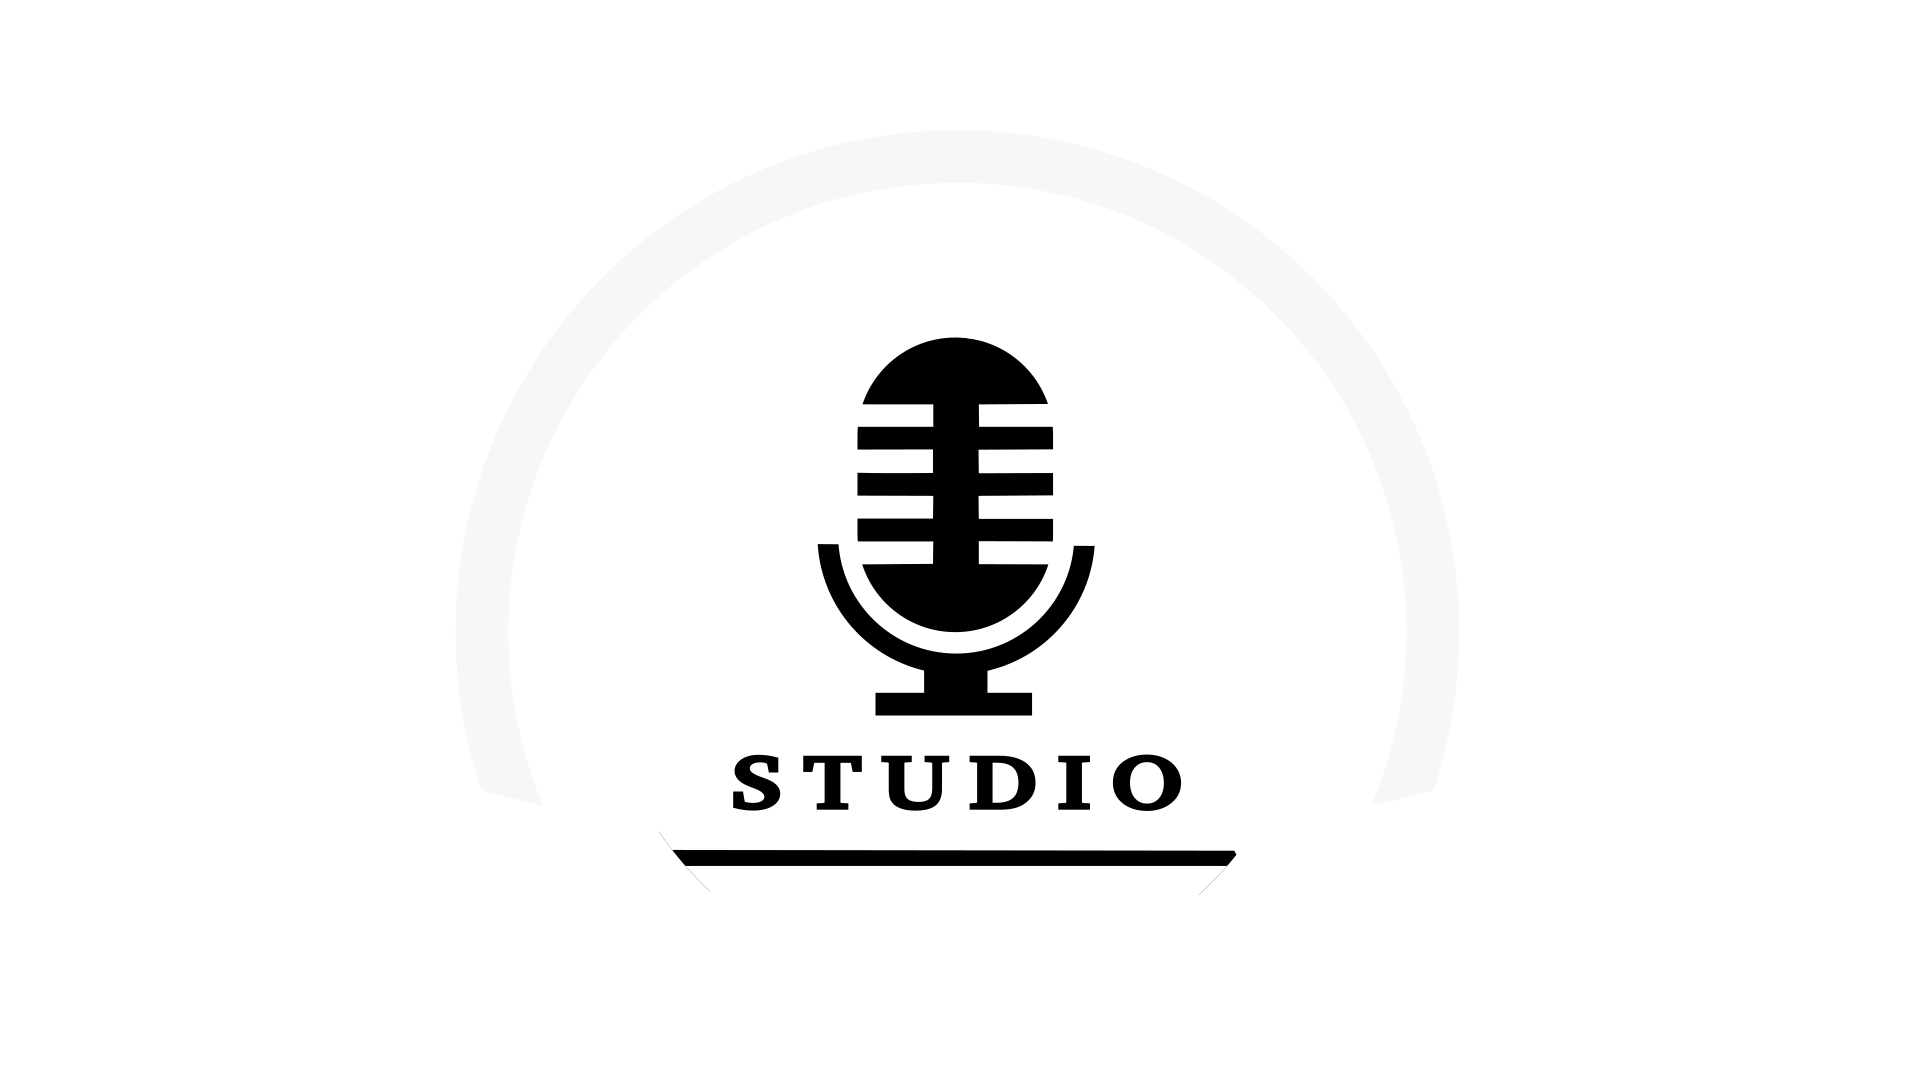 Dublin Podcast Studio